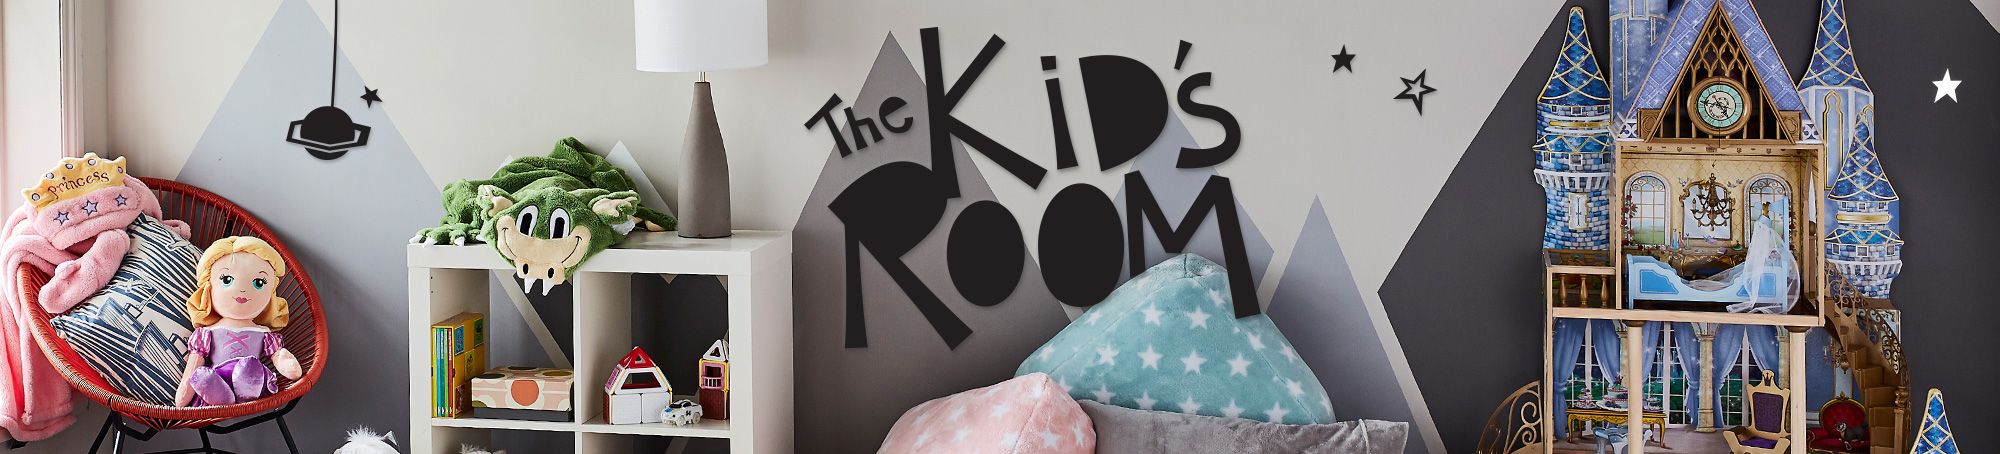 The Kid's Room